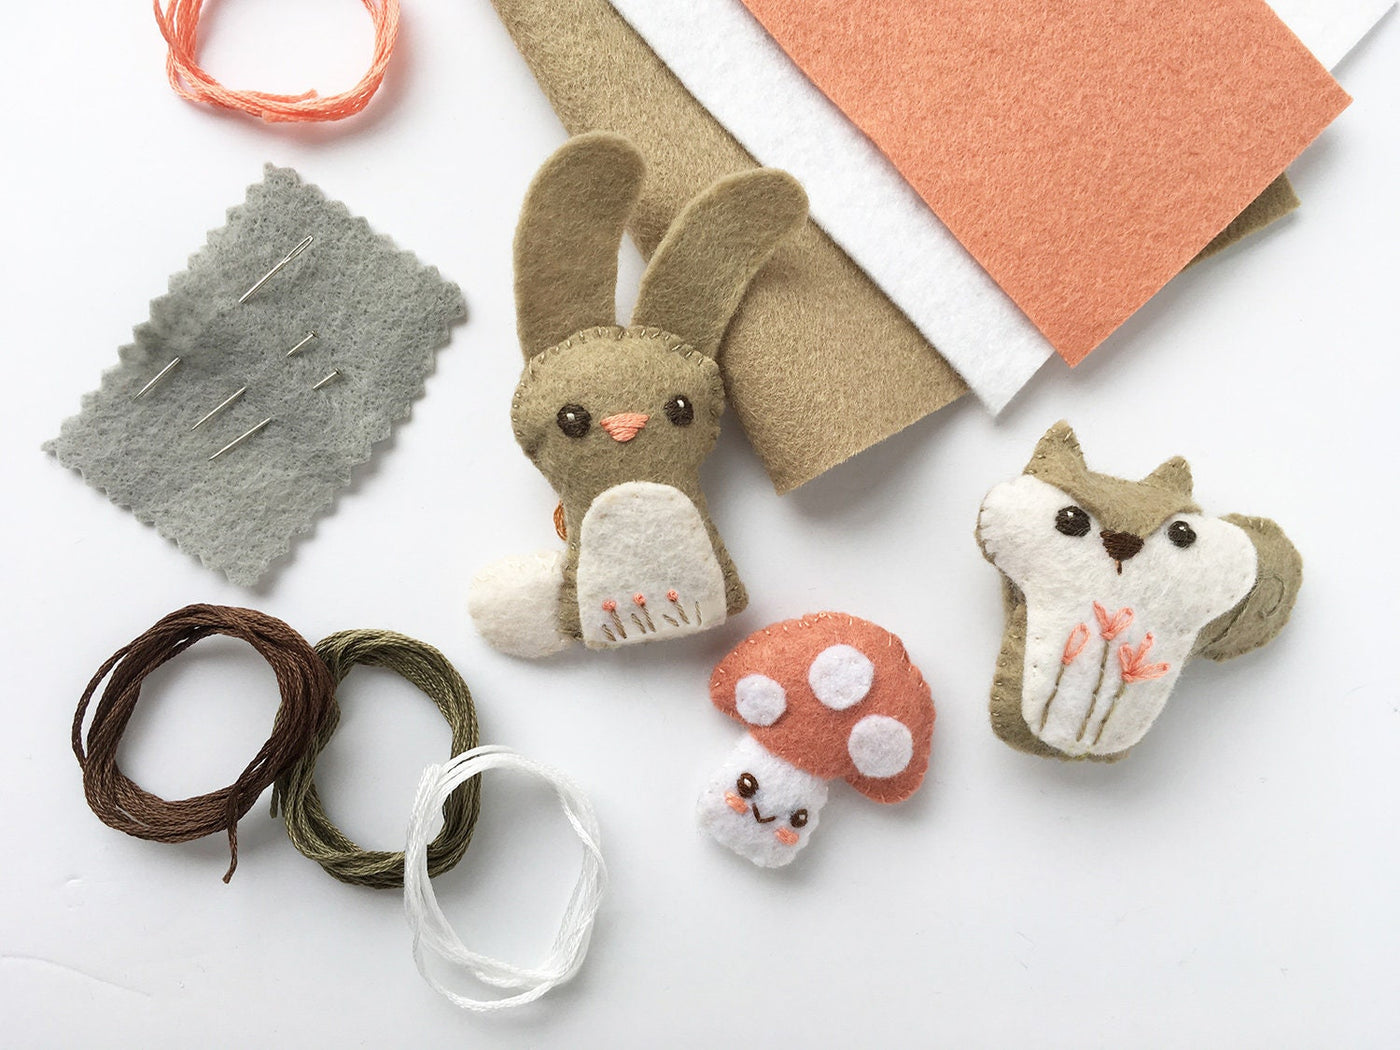 Felt Sewing Kit, Kids Crafts Projects, Diy Felt Animal, Sew Your Own Fox,  Felt Craft Kit 